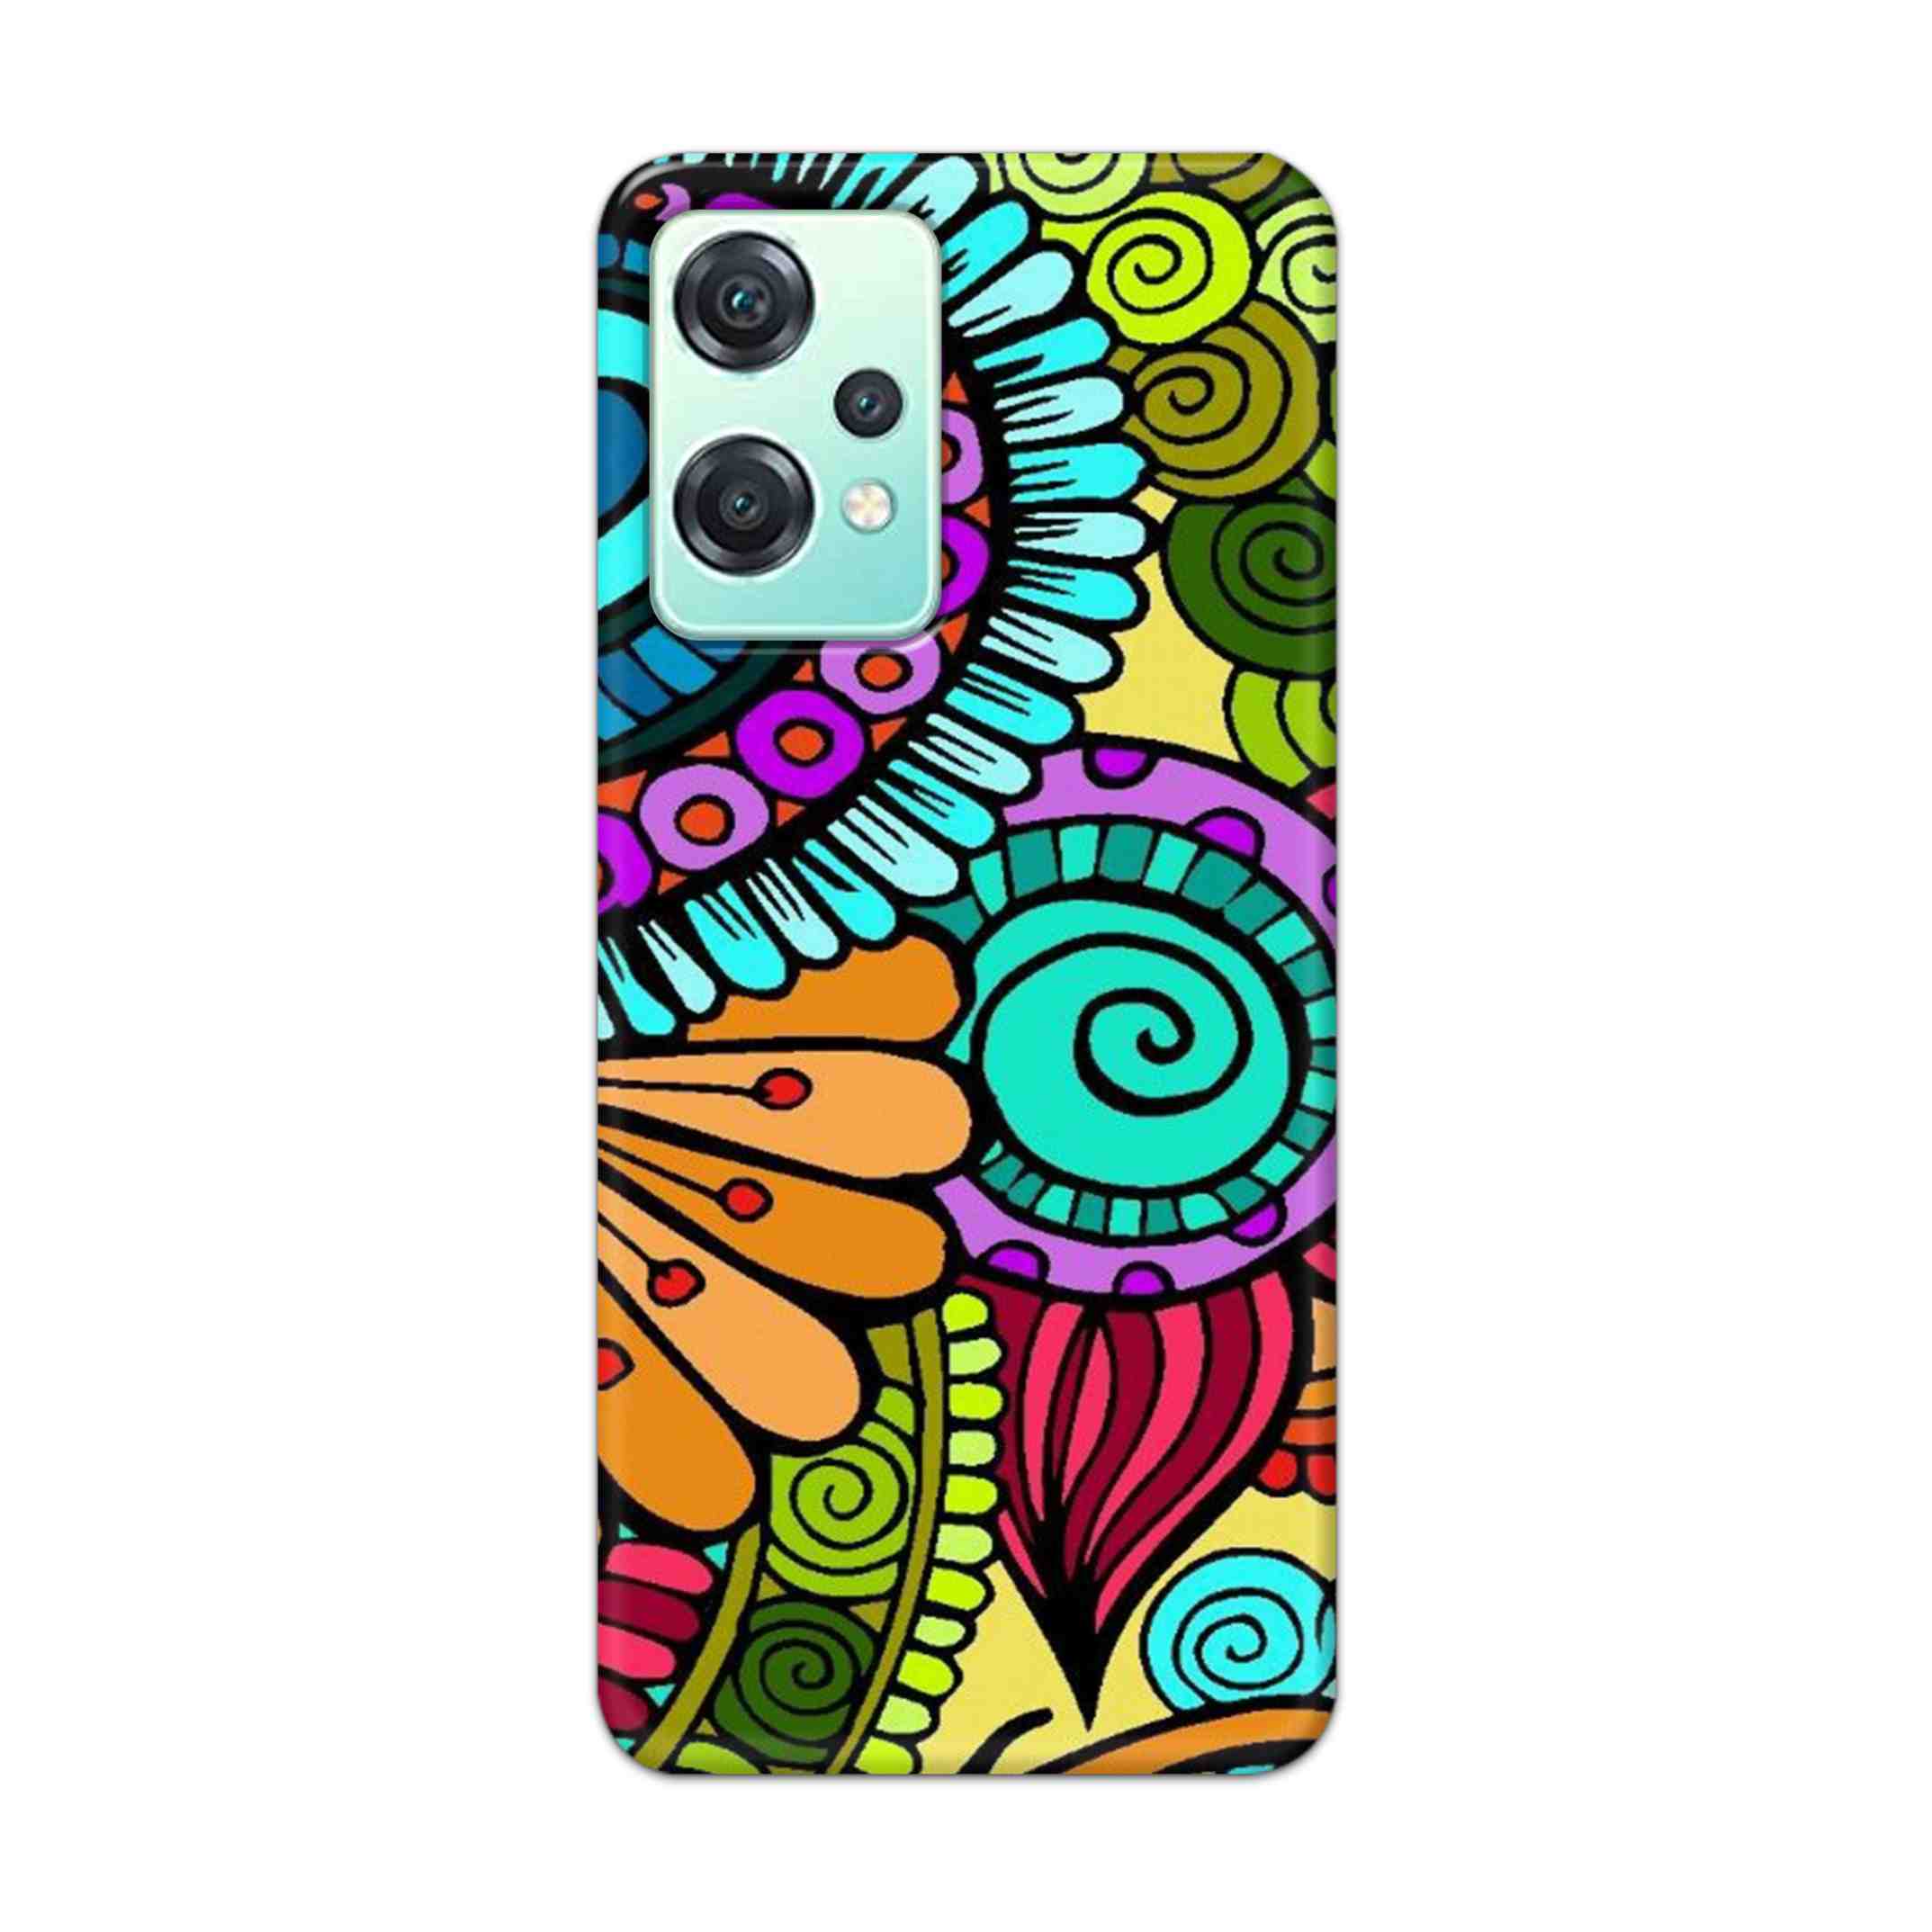 Buy The Kalachakra Mandala Hard Back Mobile Phone Case Cover For OnePlus Nord CE 2 Lite 5G Online